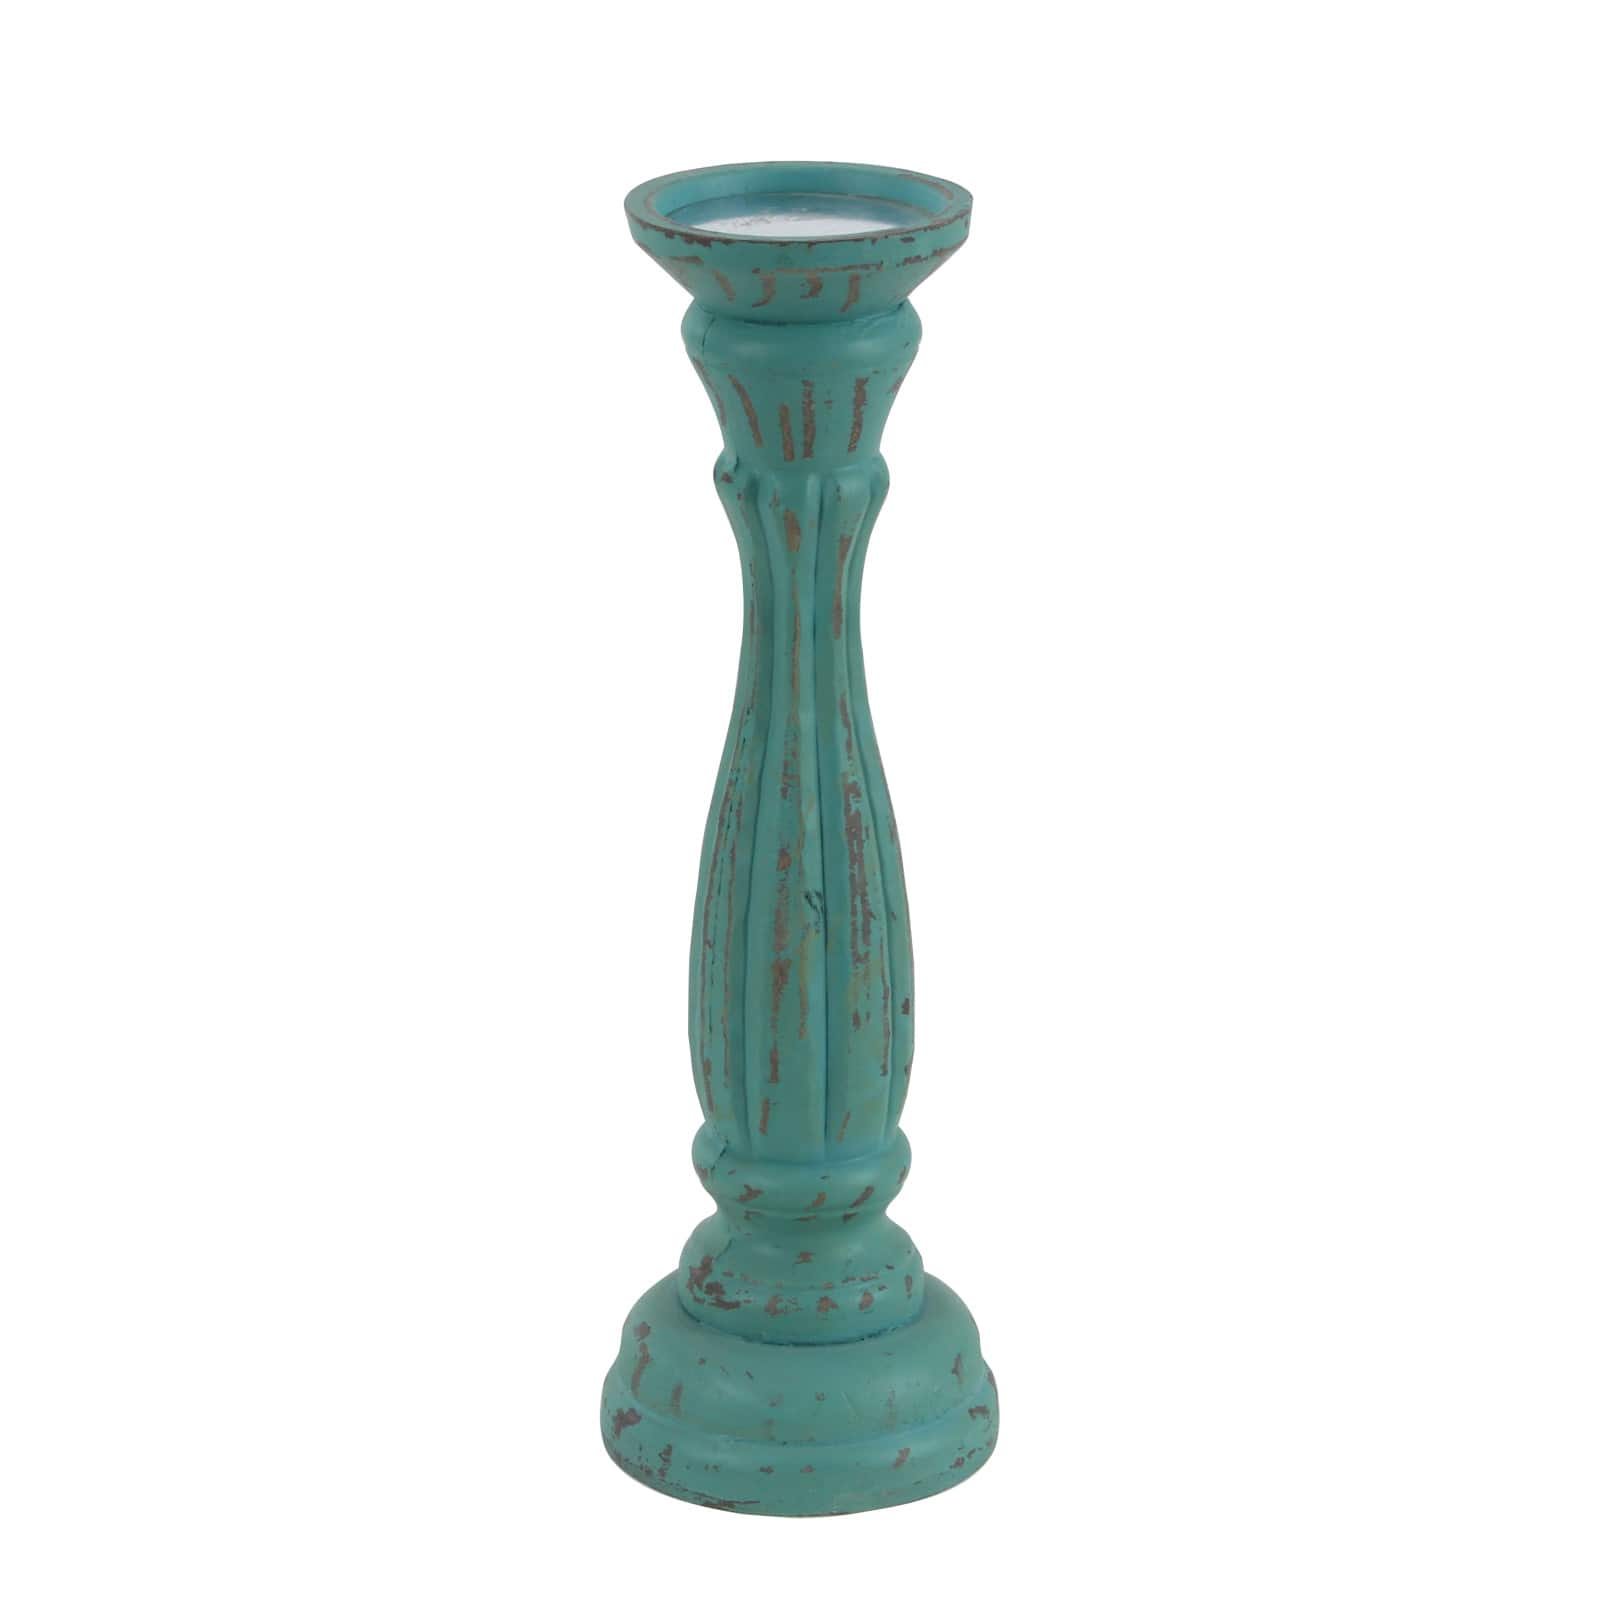 Blue Wood Traditional Candle Holder Set